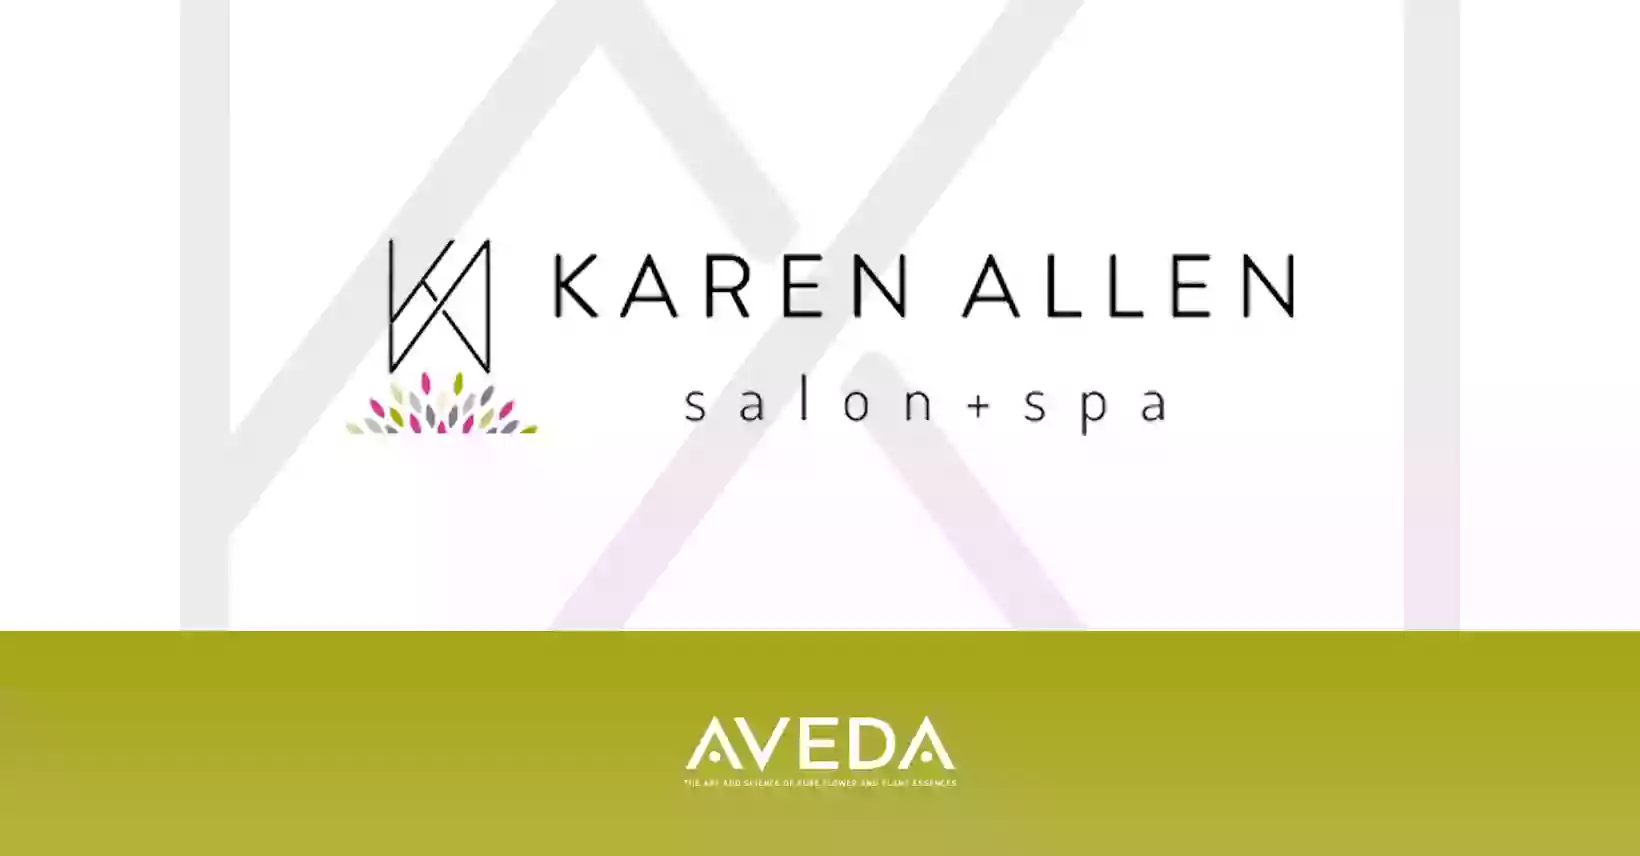 Karen Allen Salon & Spa - Riverside Plaza